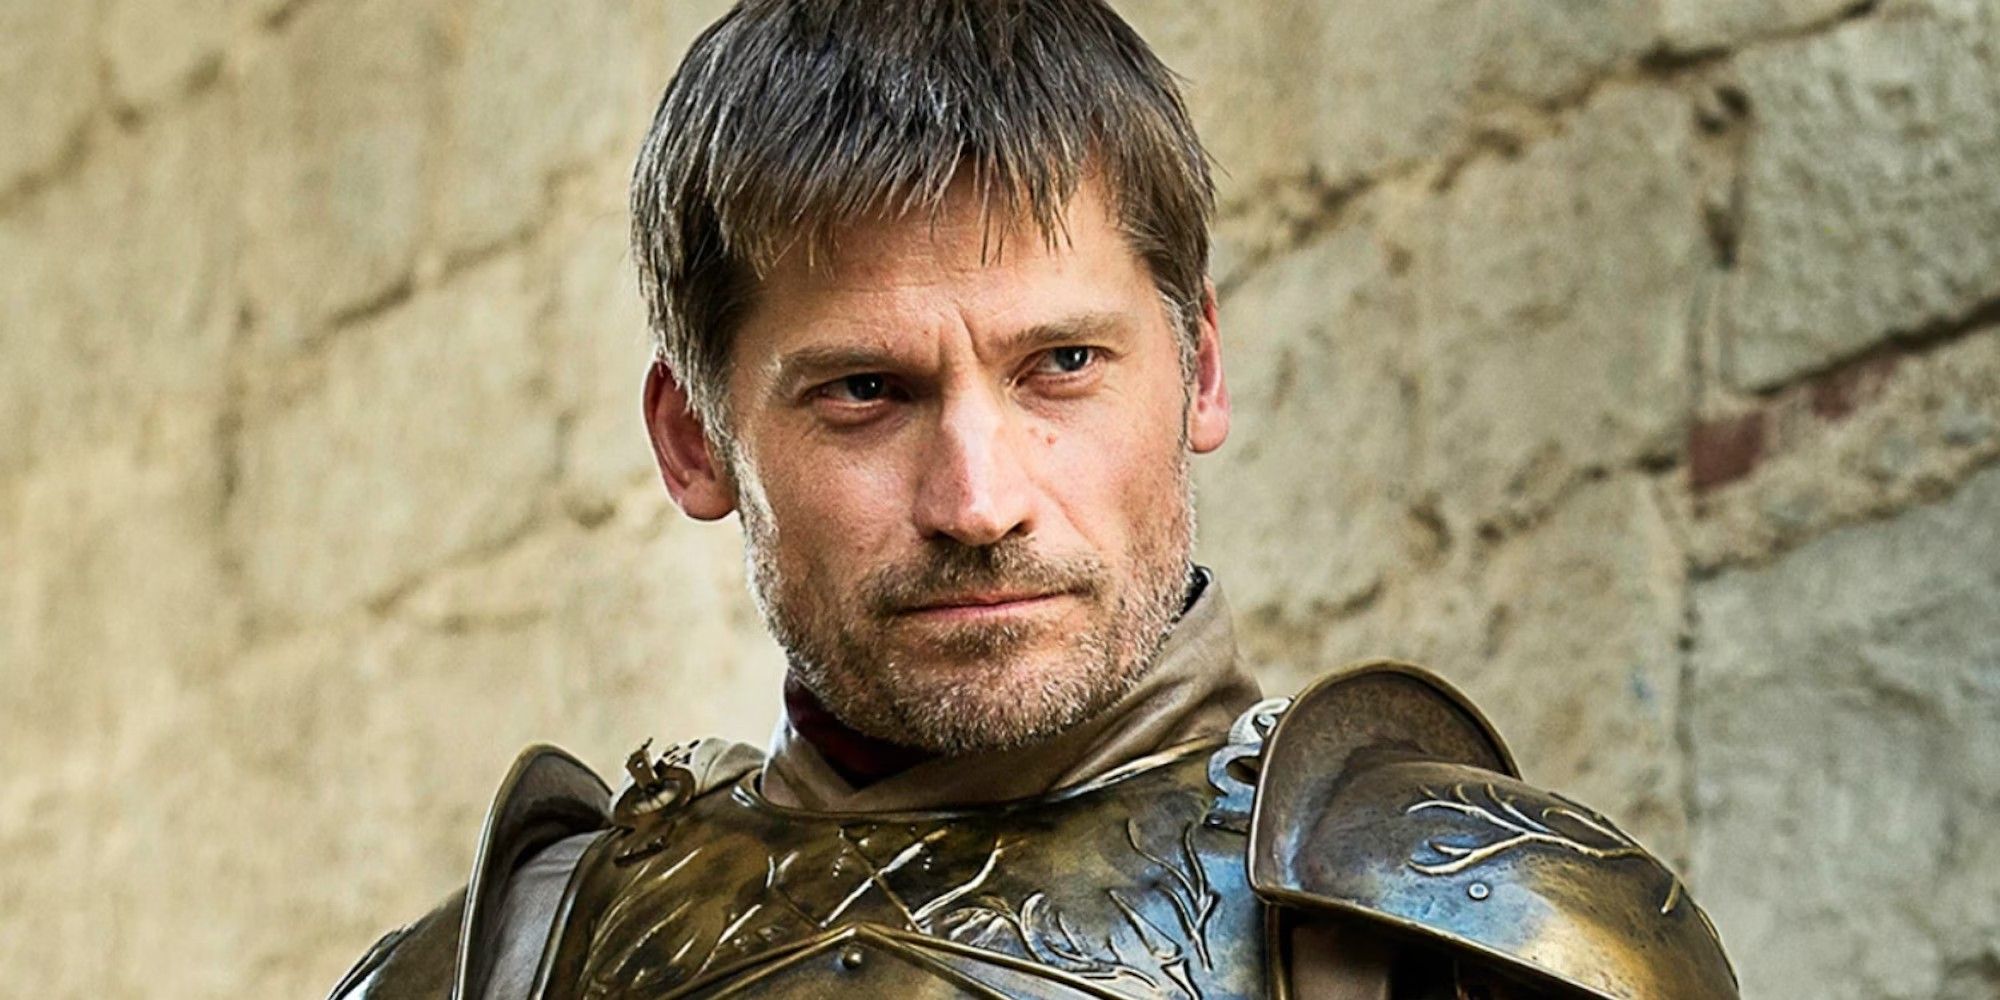 Jaime Lannister in golden armor in Game of Thrones.